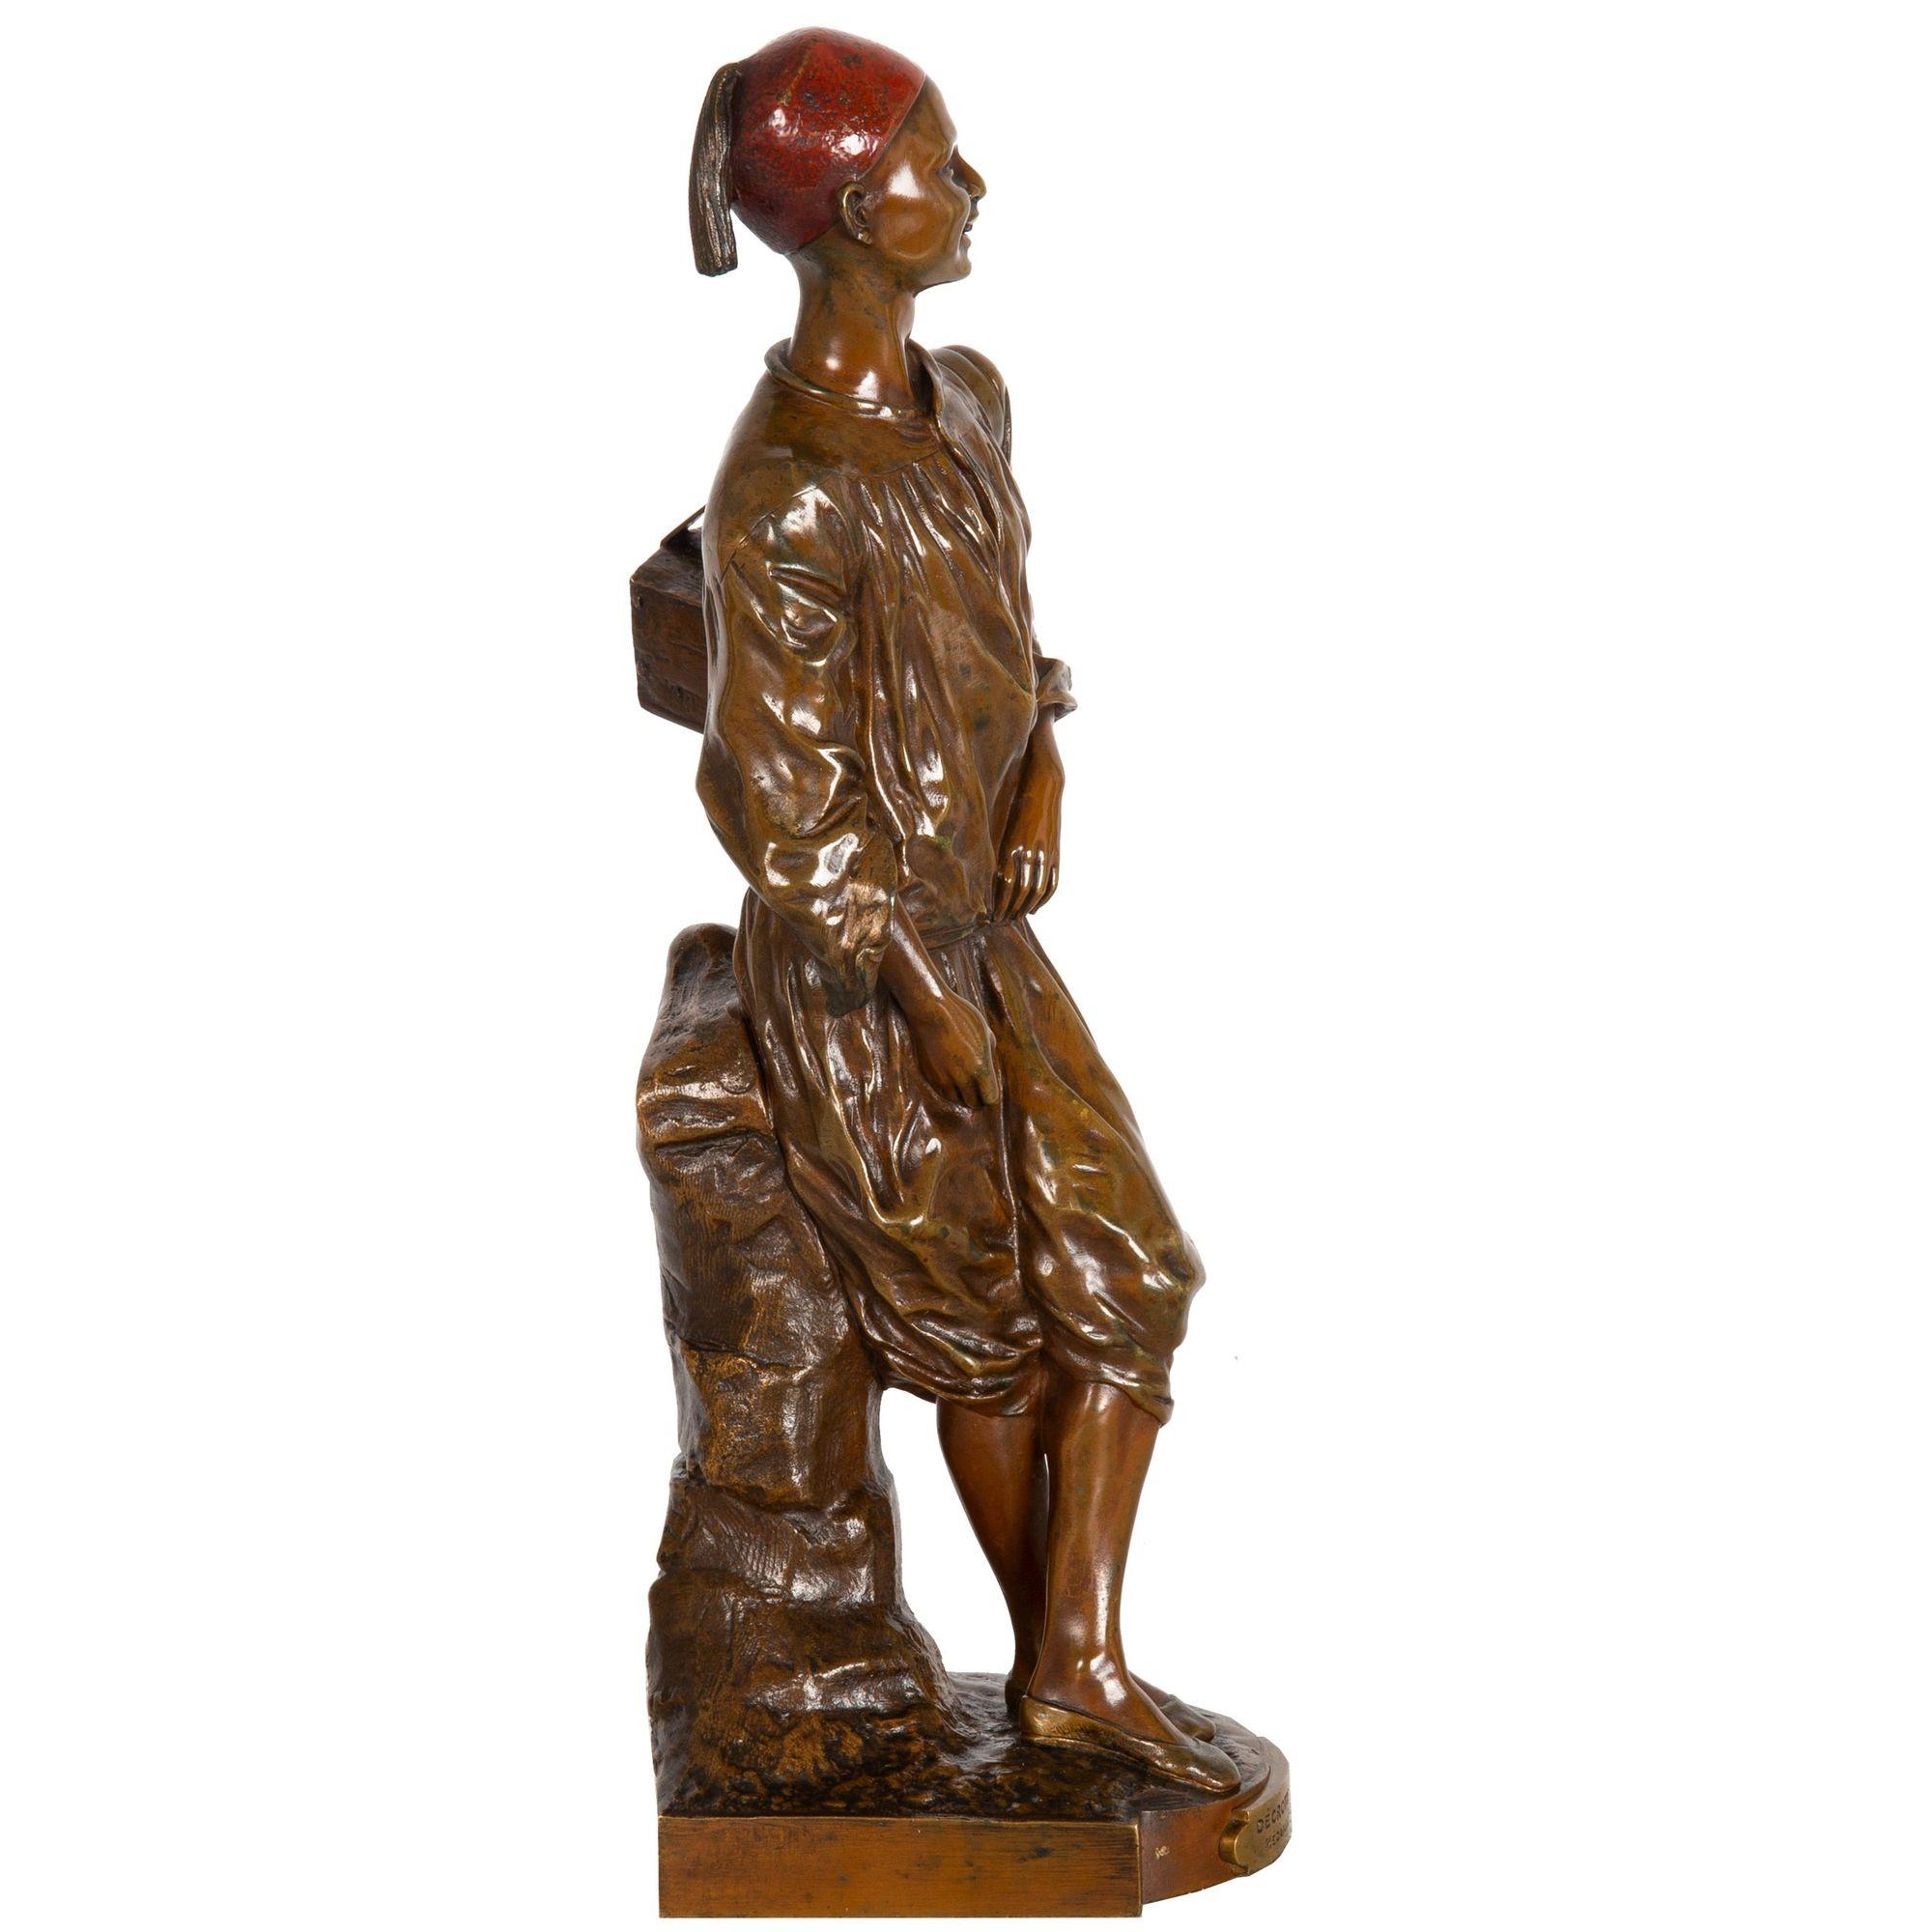 20th Century French Orientalist Bronze Sculpture “Arab Shoeshine” after Edouard Drouot For Sale